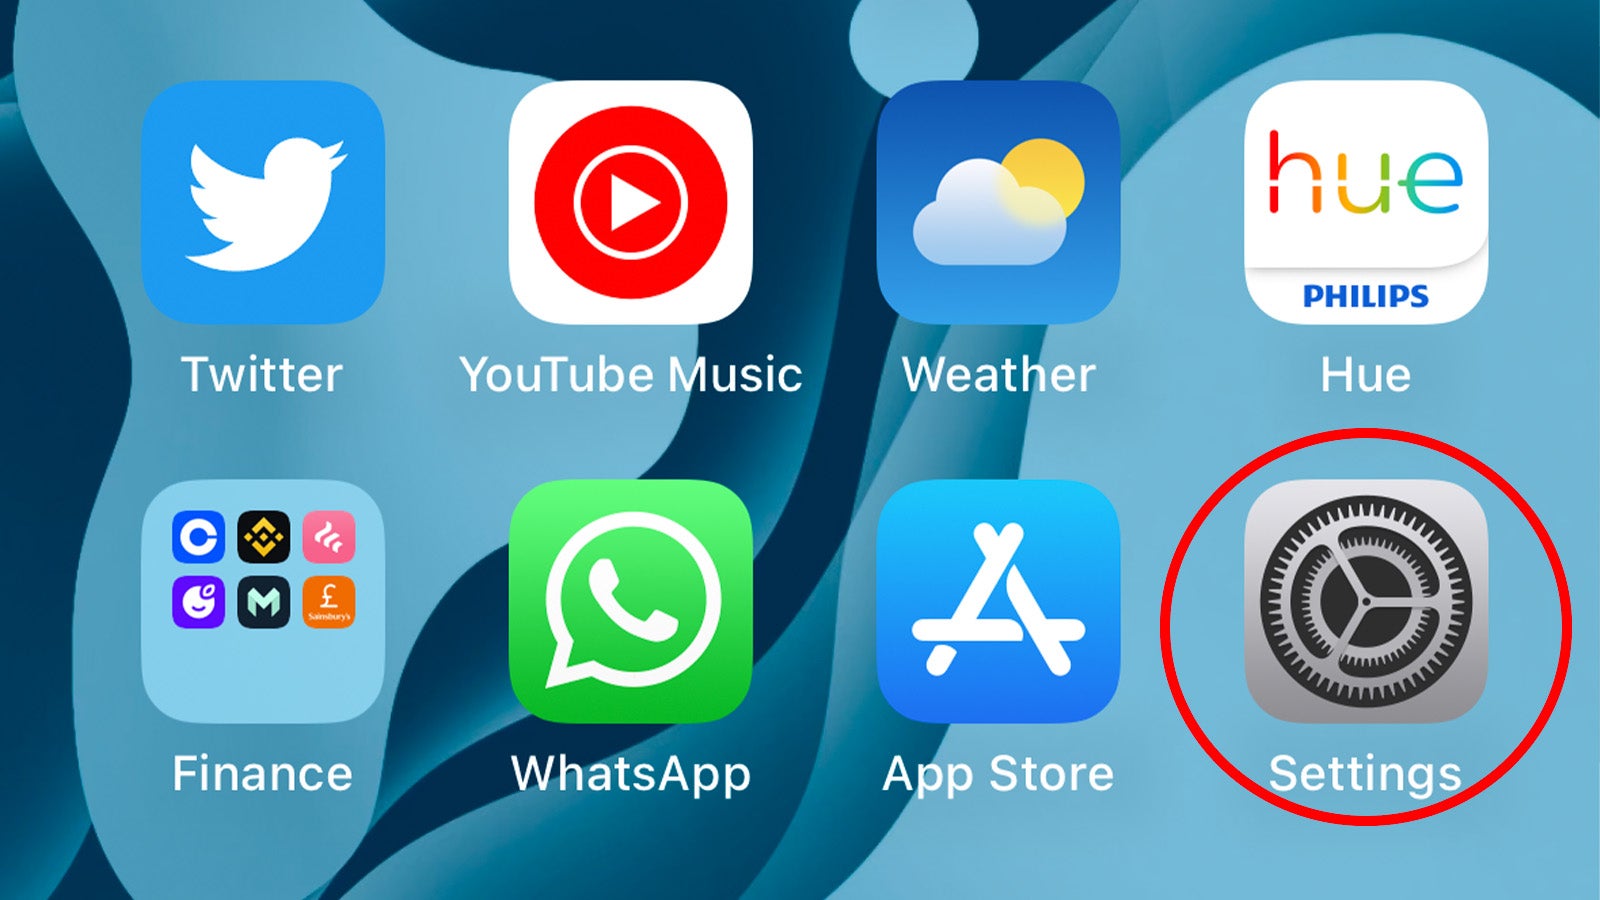 Settings app on the iOS home screen